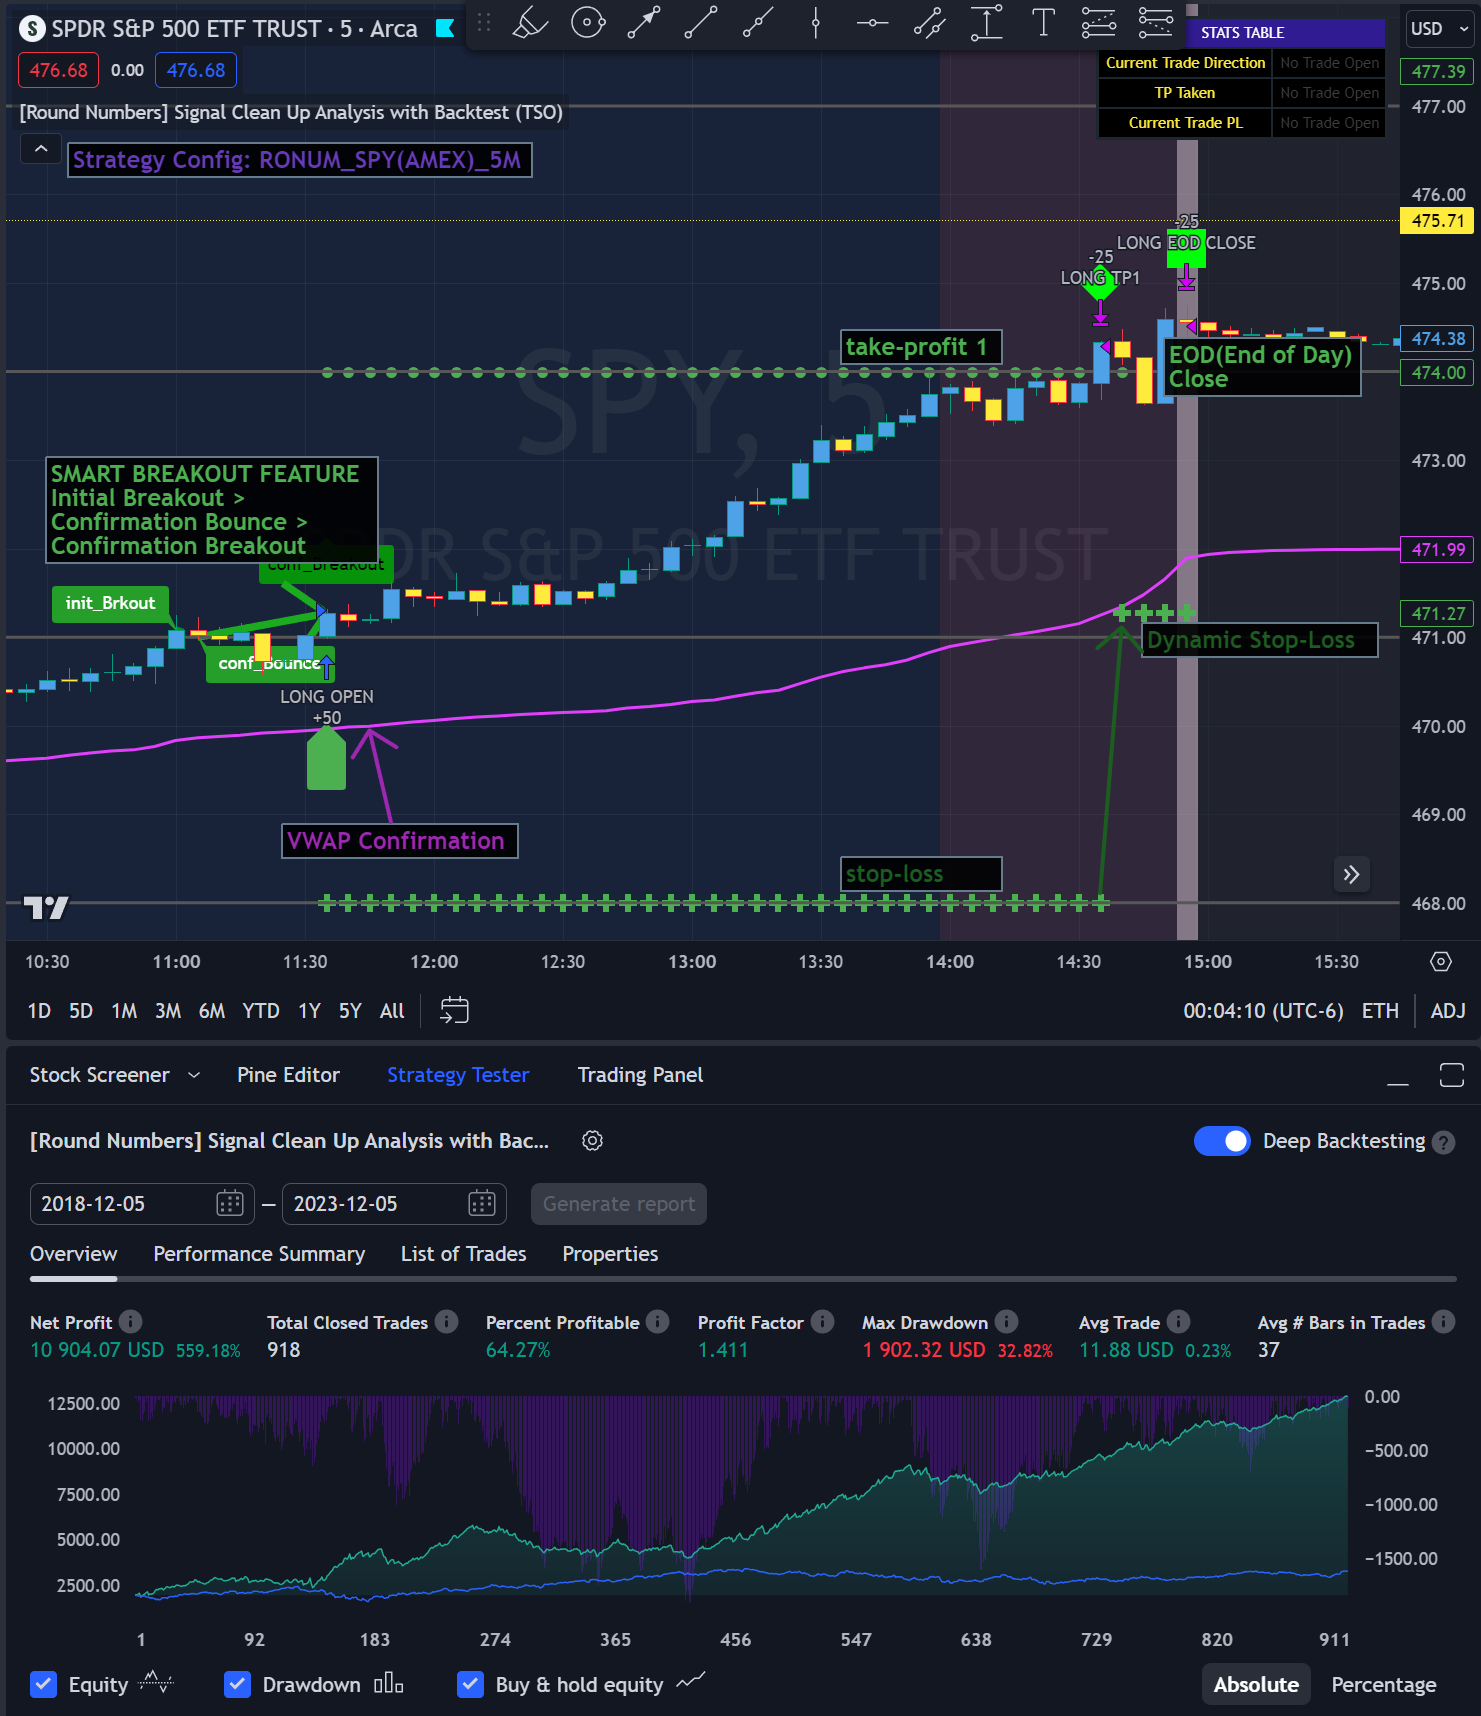 Trading Indicator Screenshots - Indices - SPY - S&P500